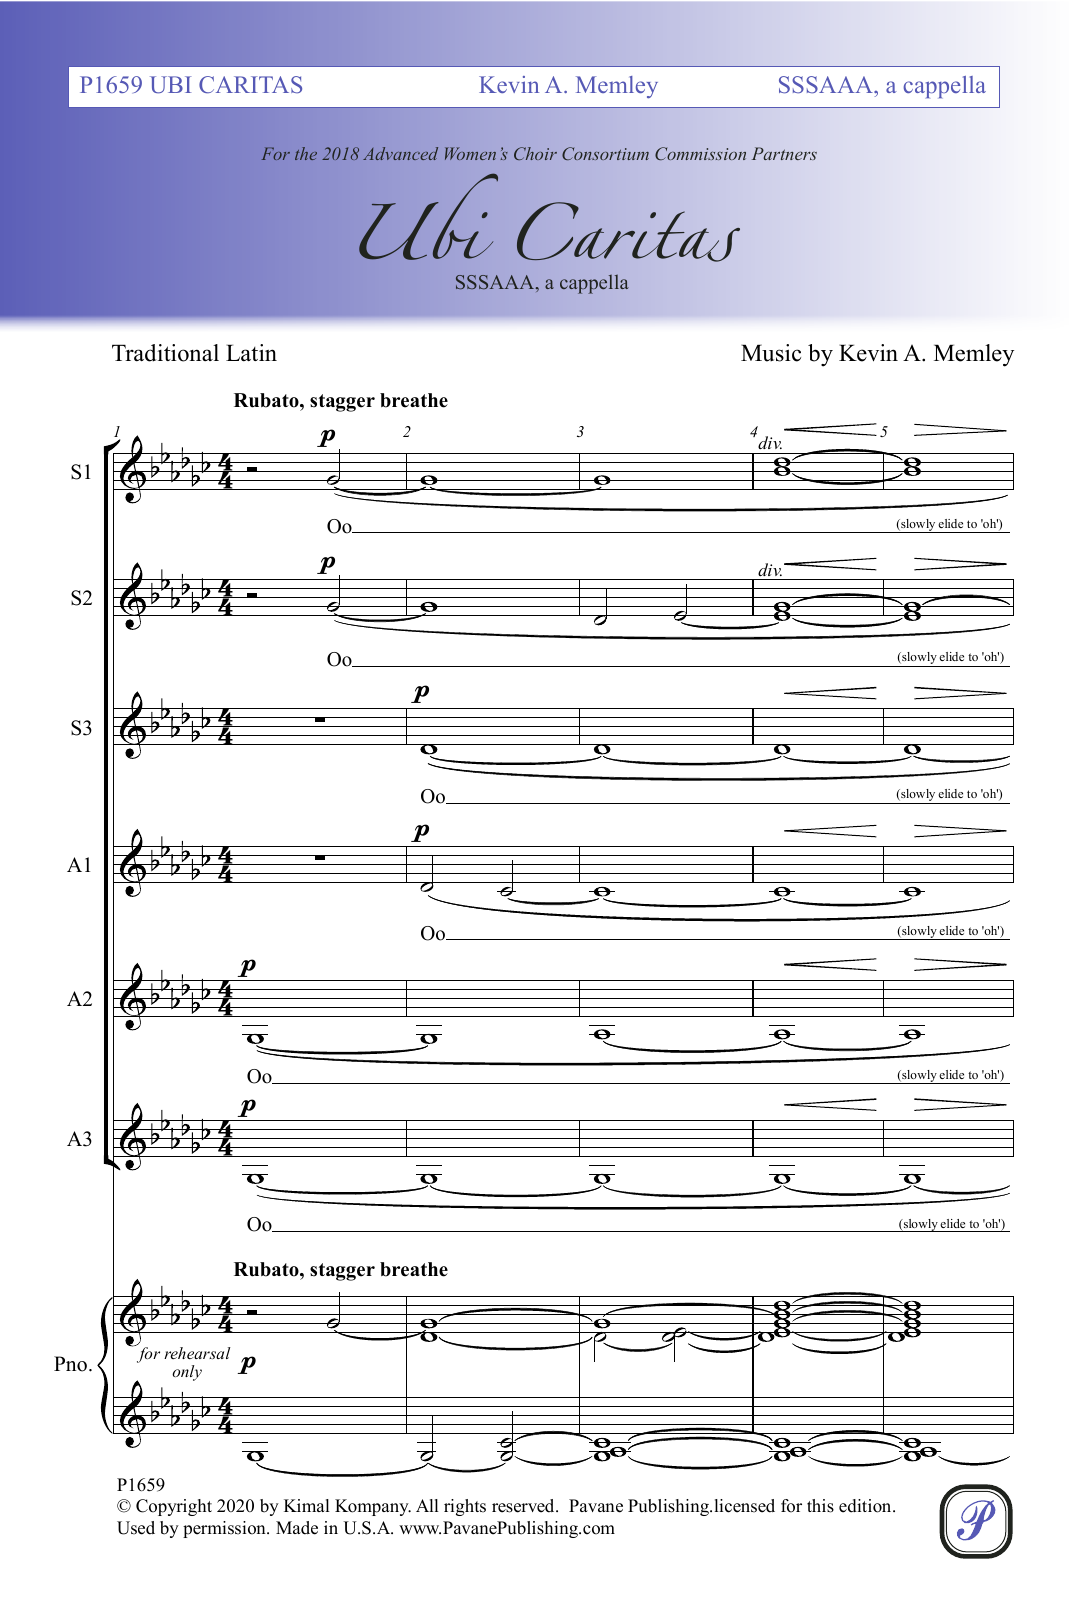 Download Kevin A. Memley Ubi Caritas Sheet Music